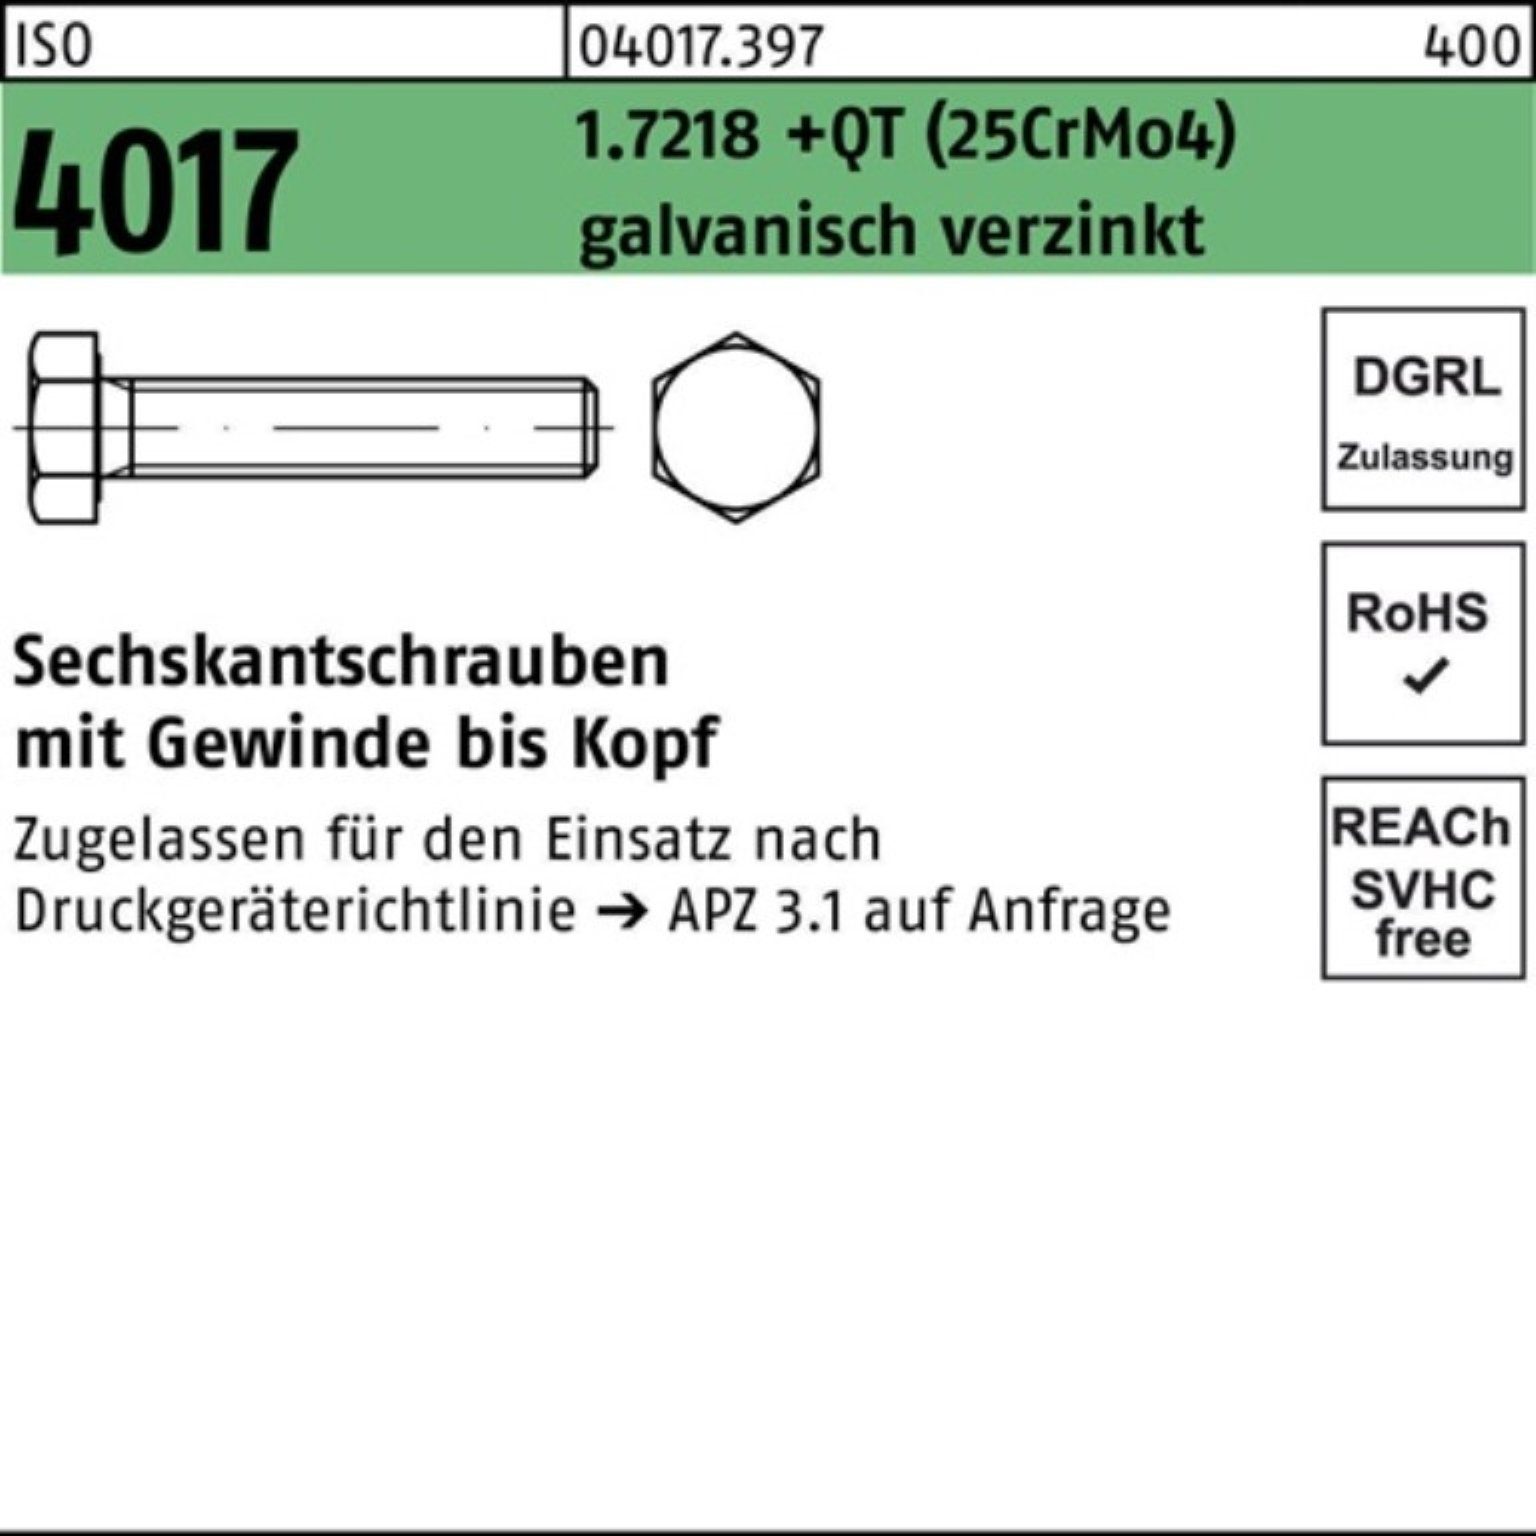 100er g 4017 VG M20x45 Bufab (25CrMo4) Pack +QT Sechskantschraube ISO 1.7218 Sechskantschraube